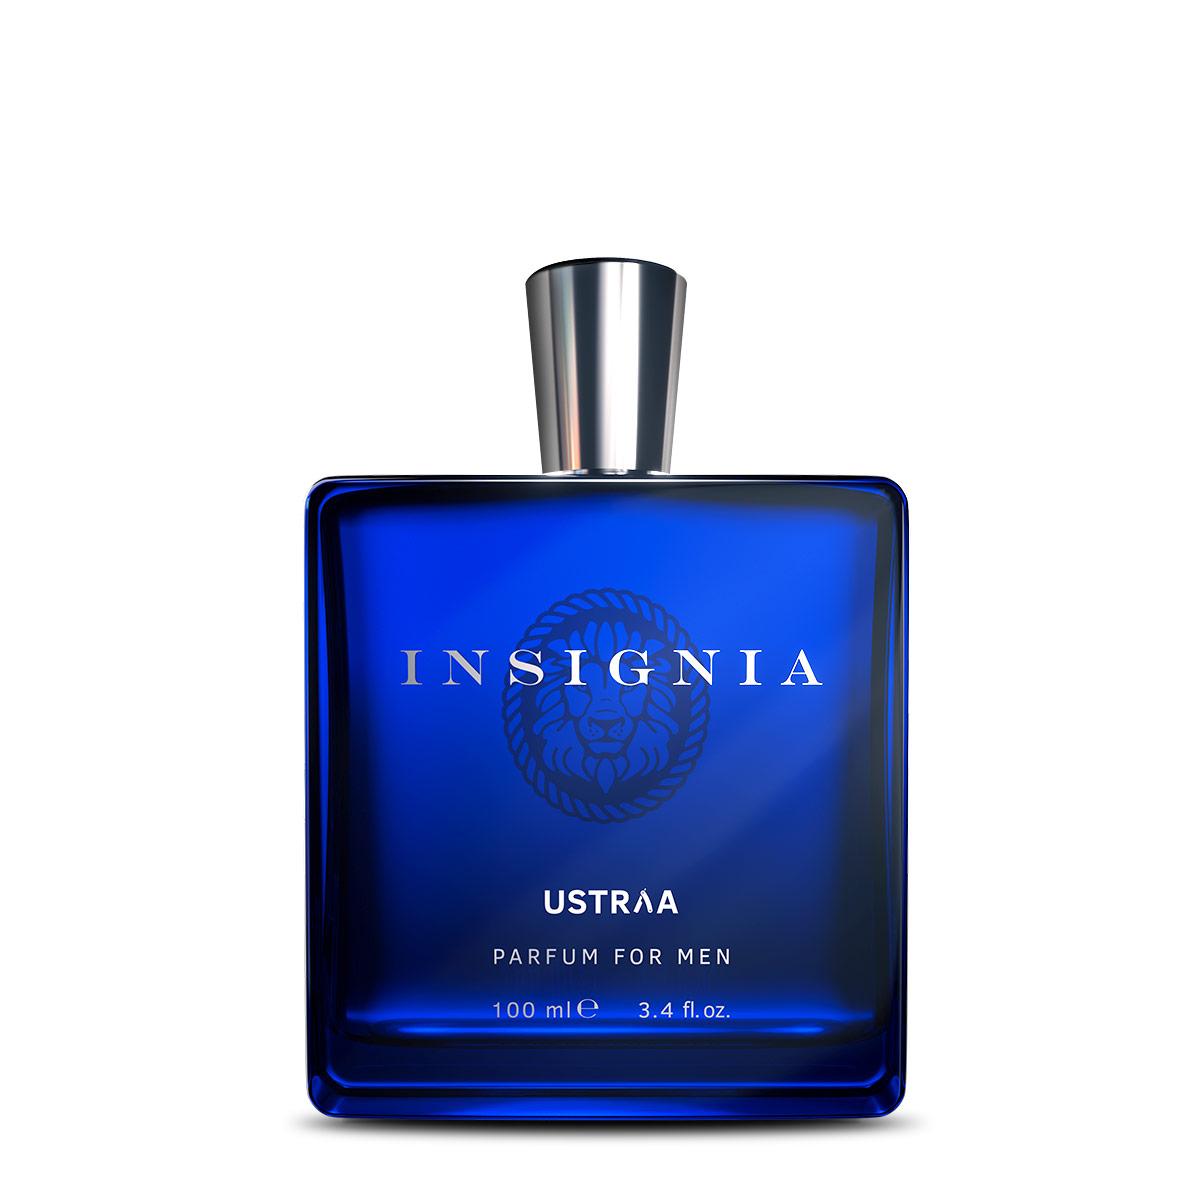 Ustraa Insignia Perfume For Men – 100ml